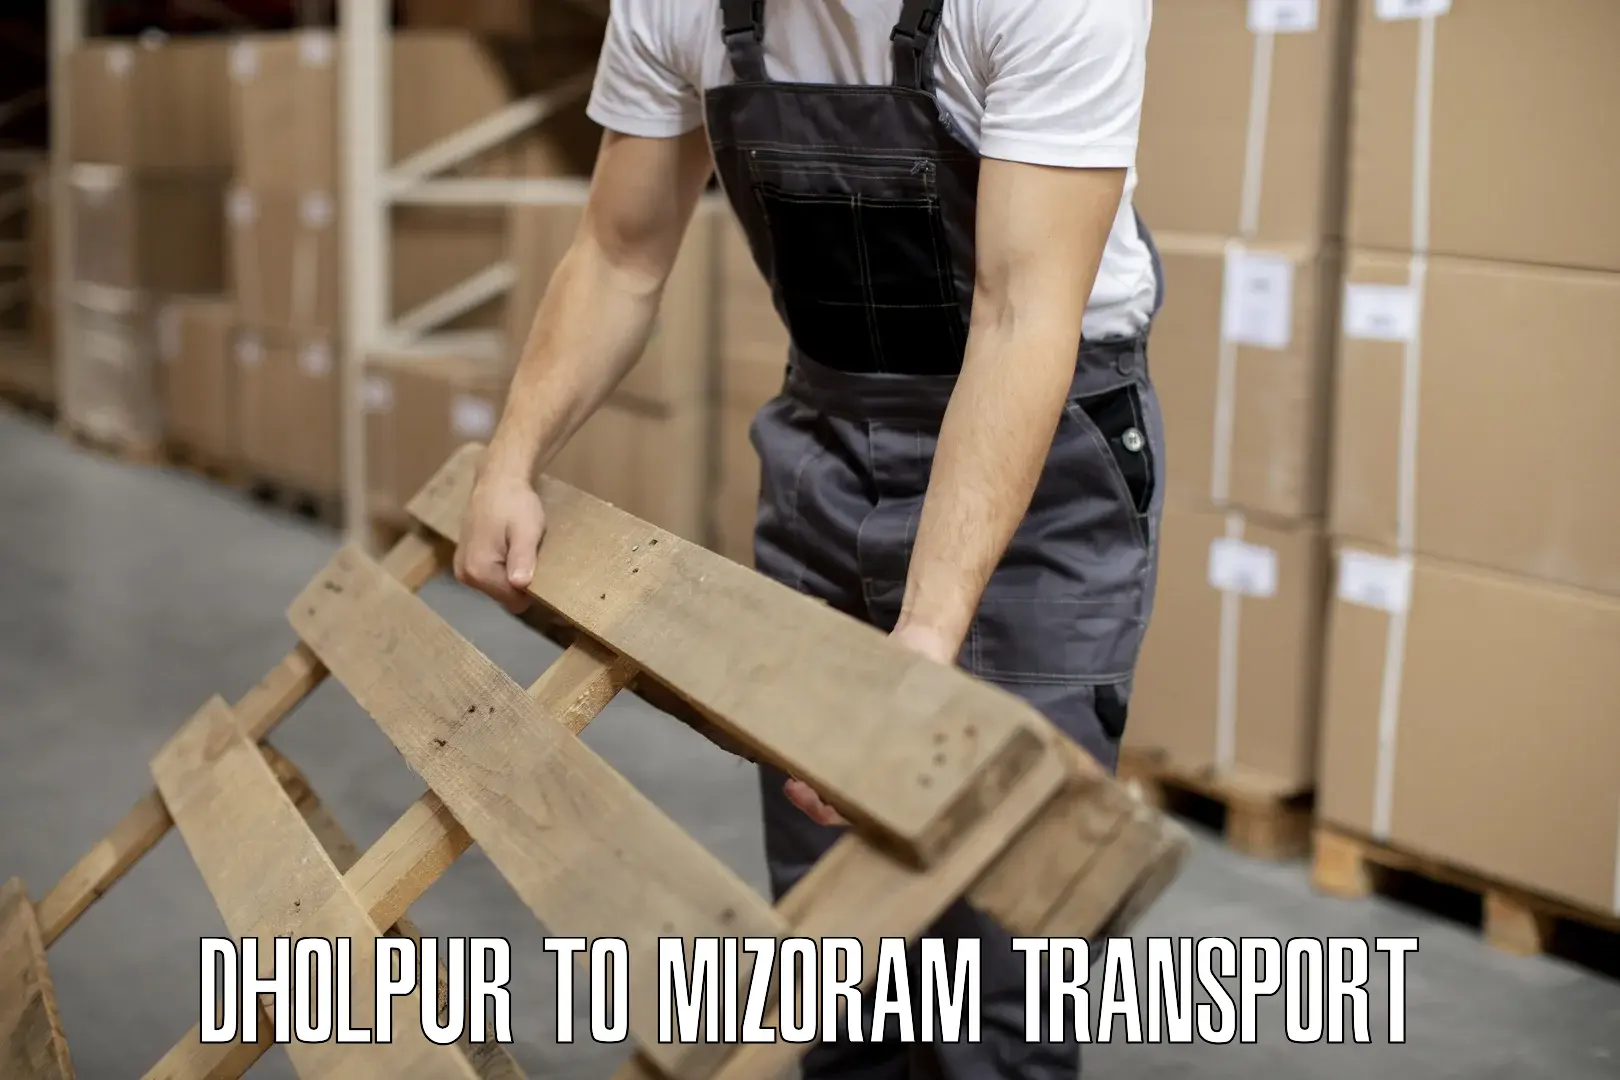 Delivery service Dholpur to Mizoram